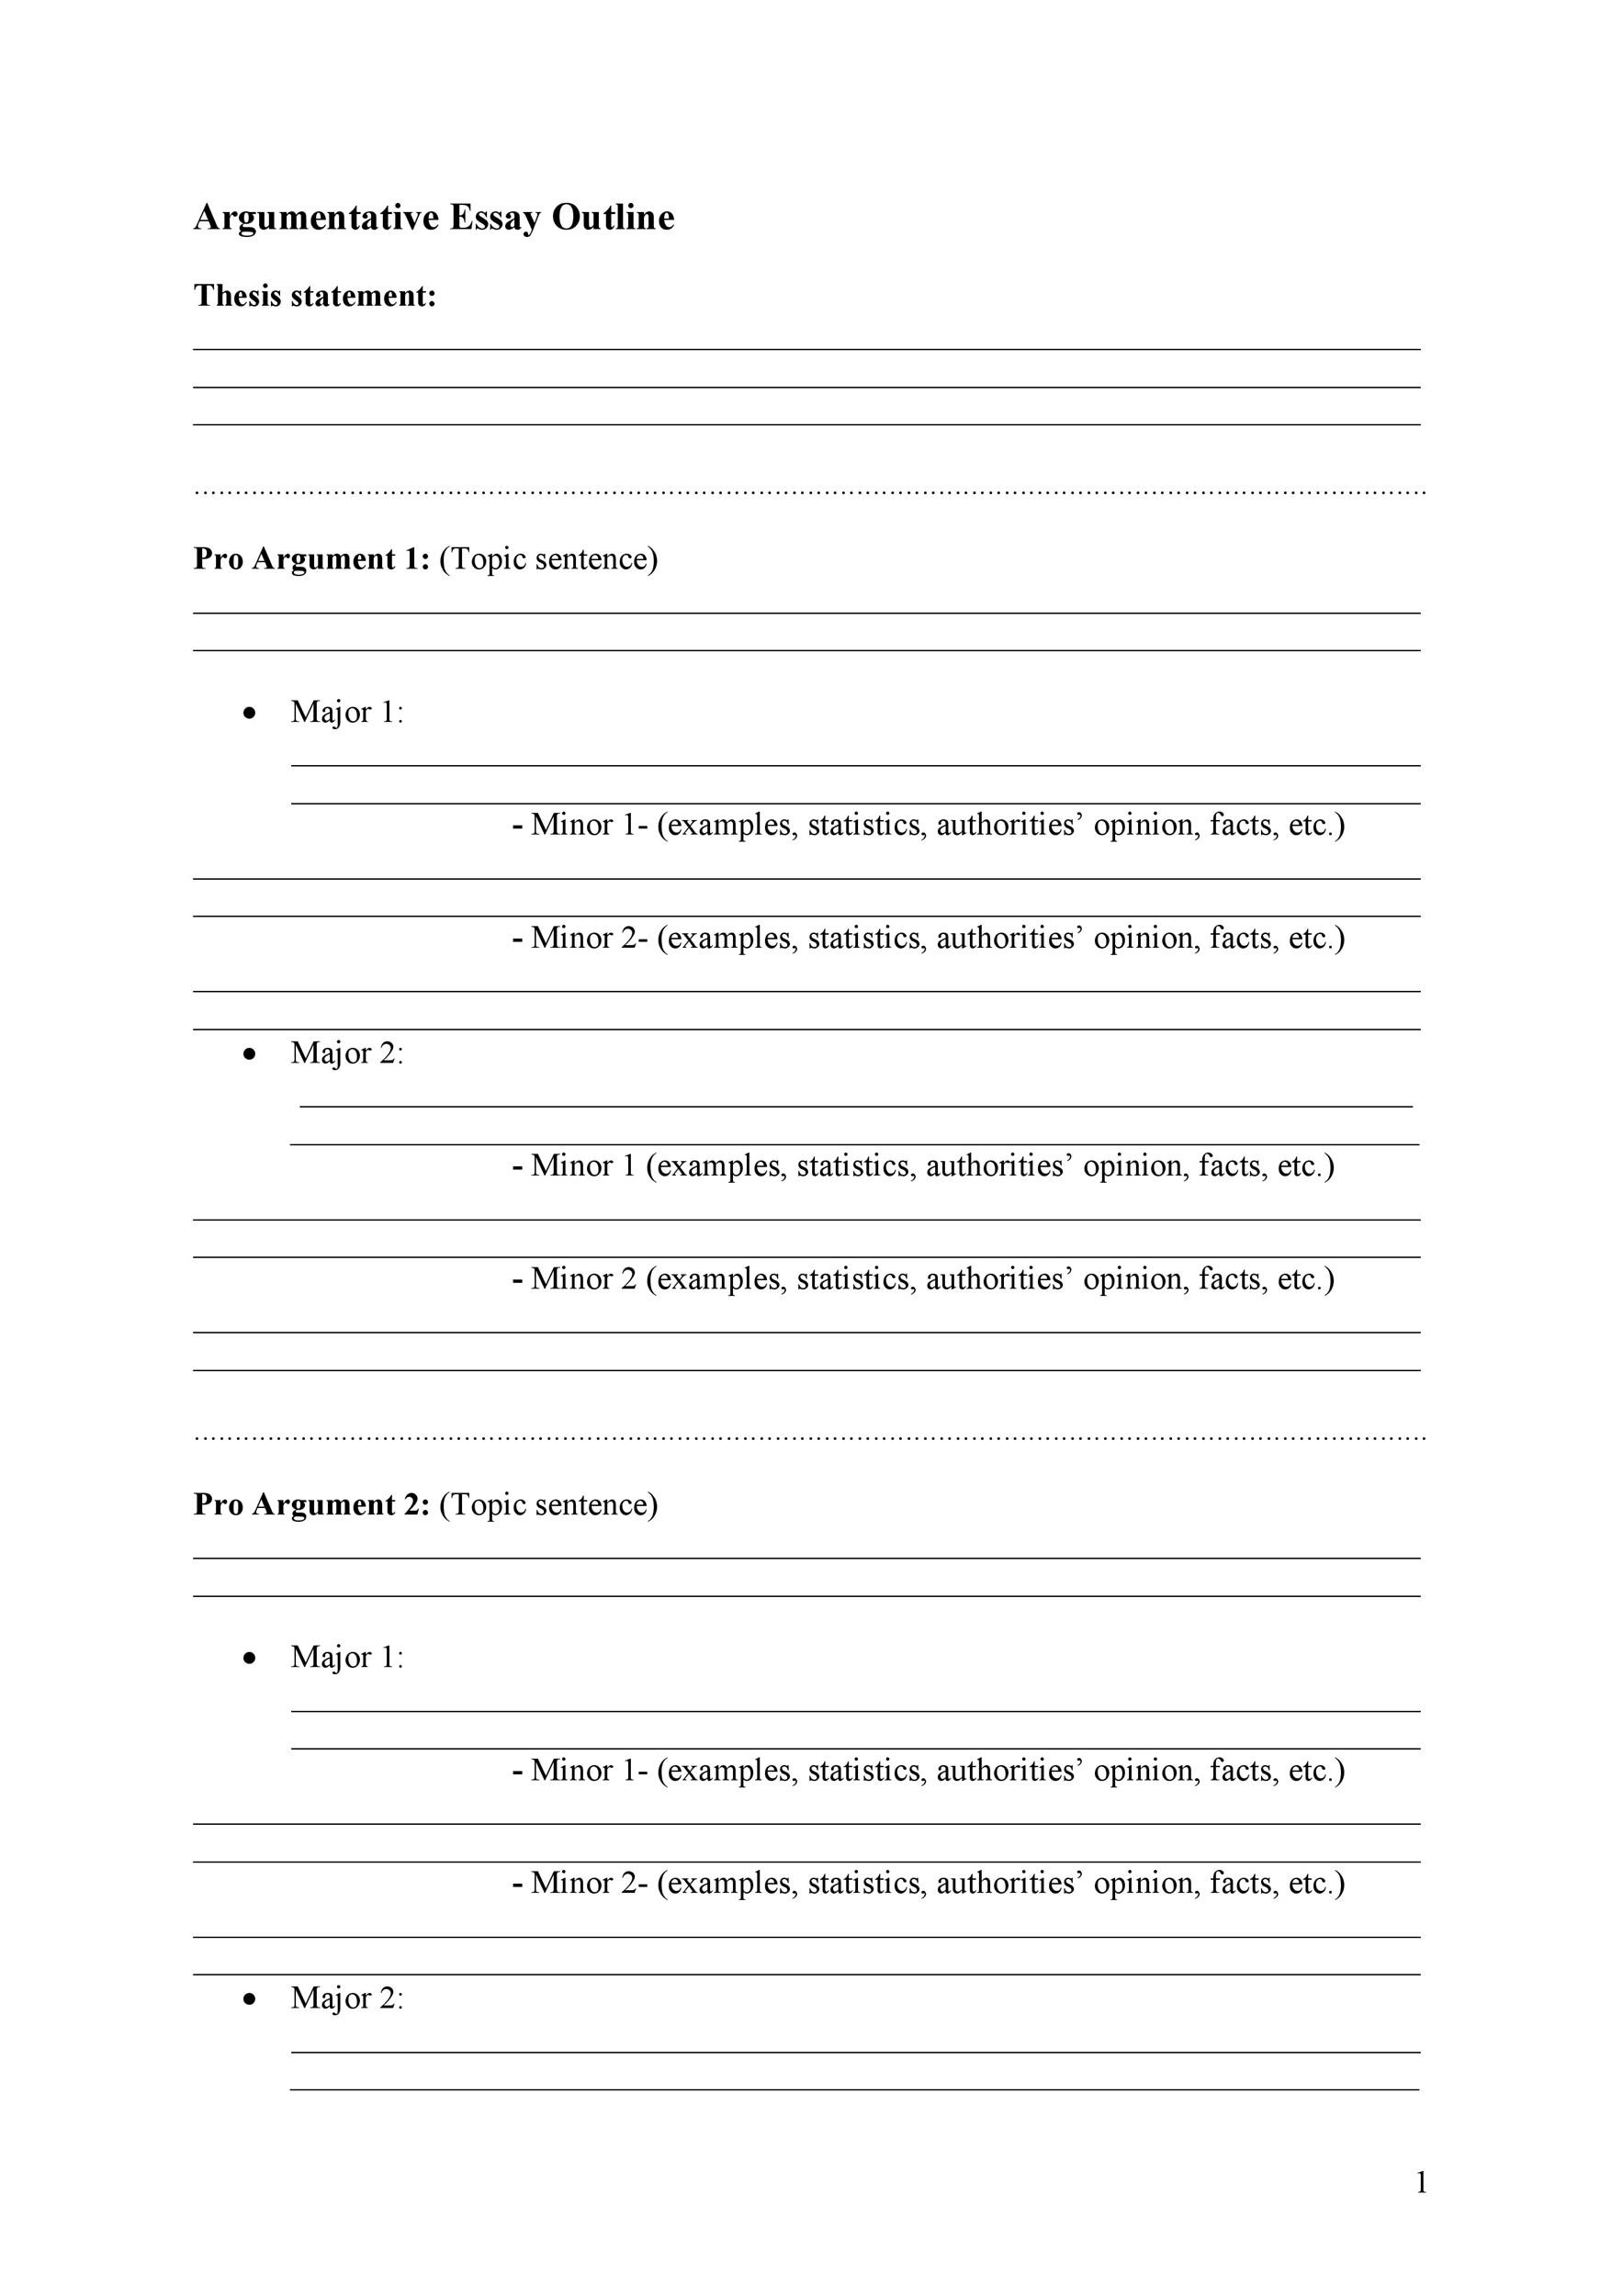 template for argumentative essay outline